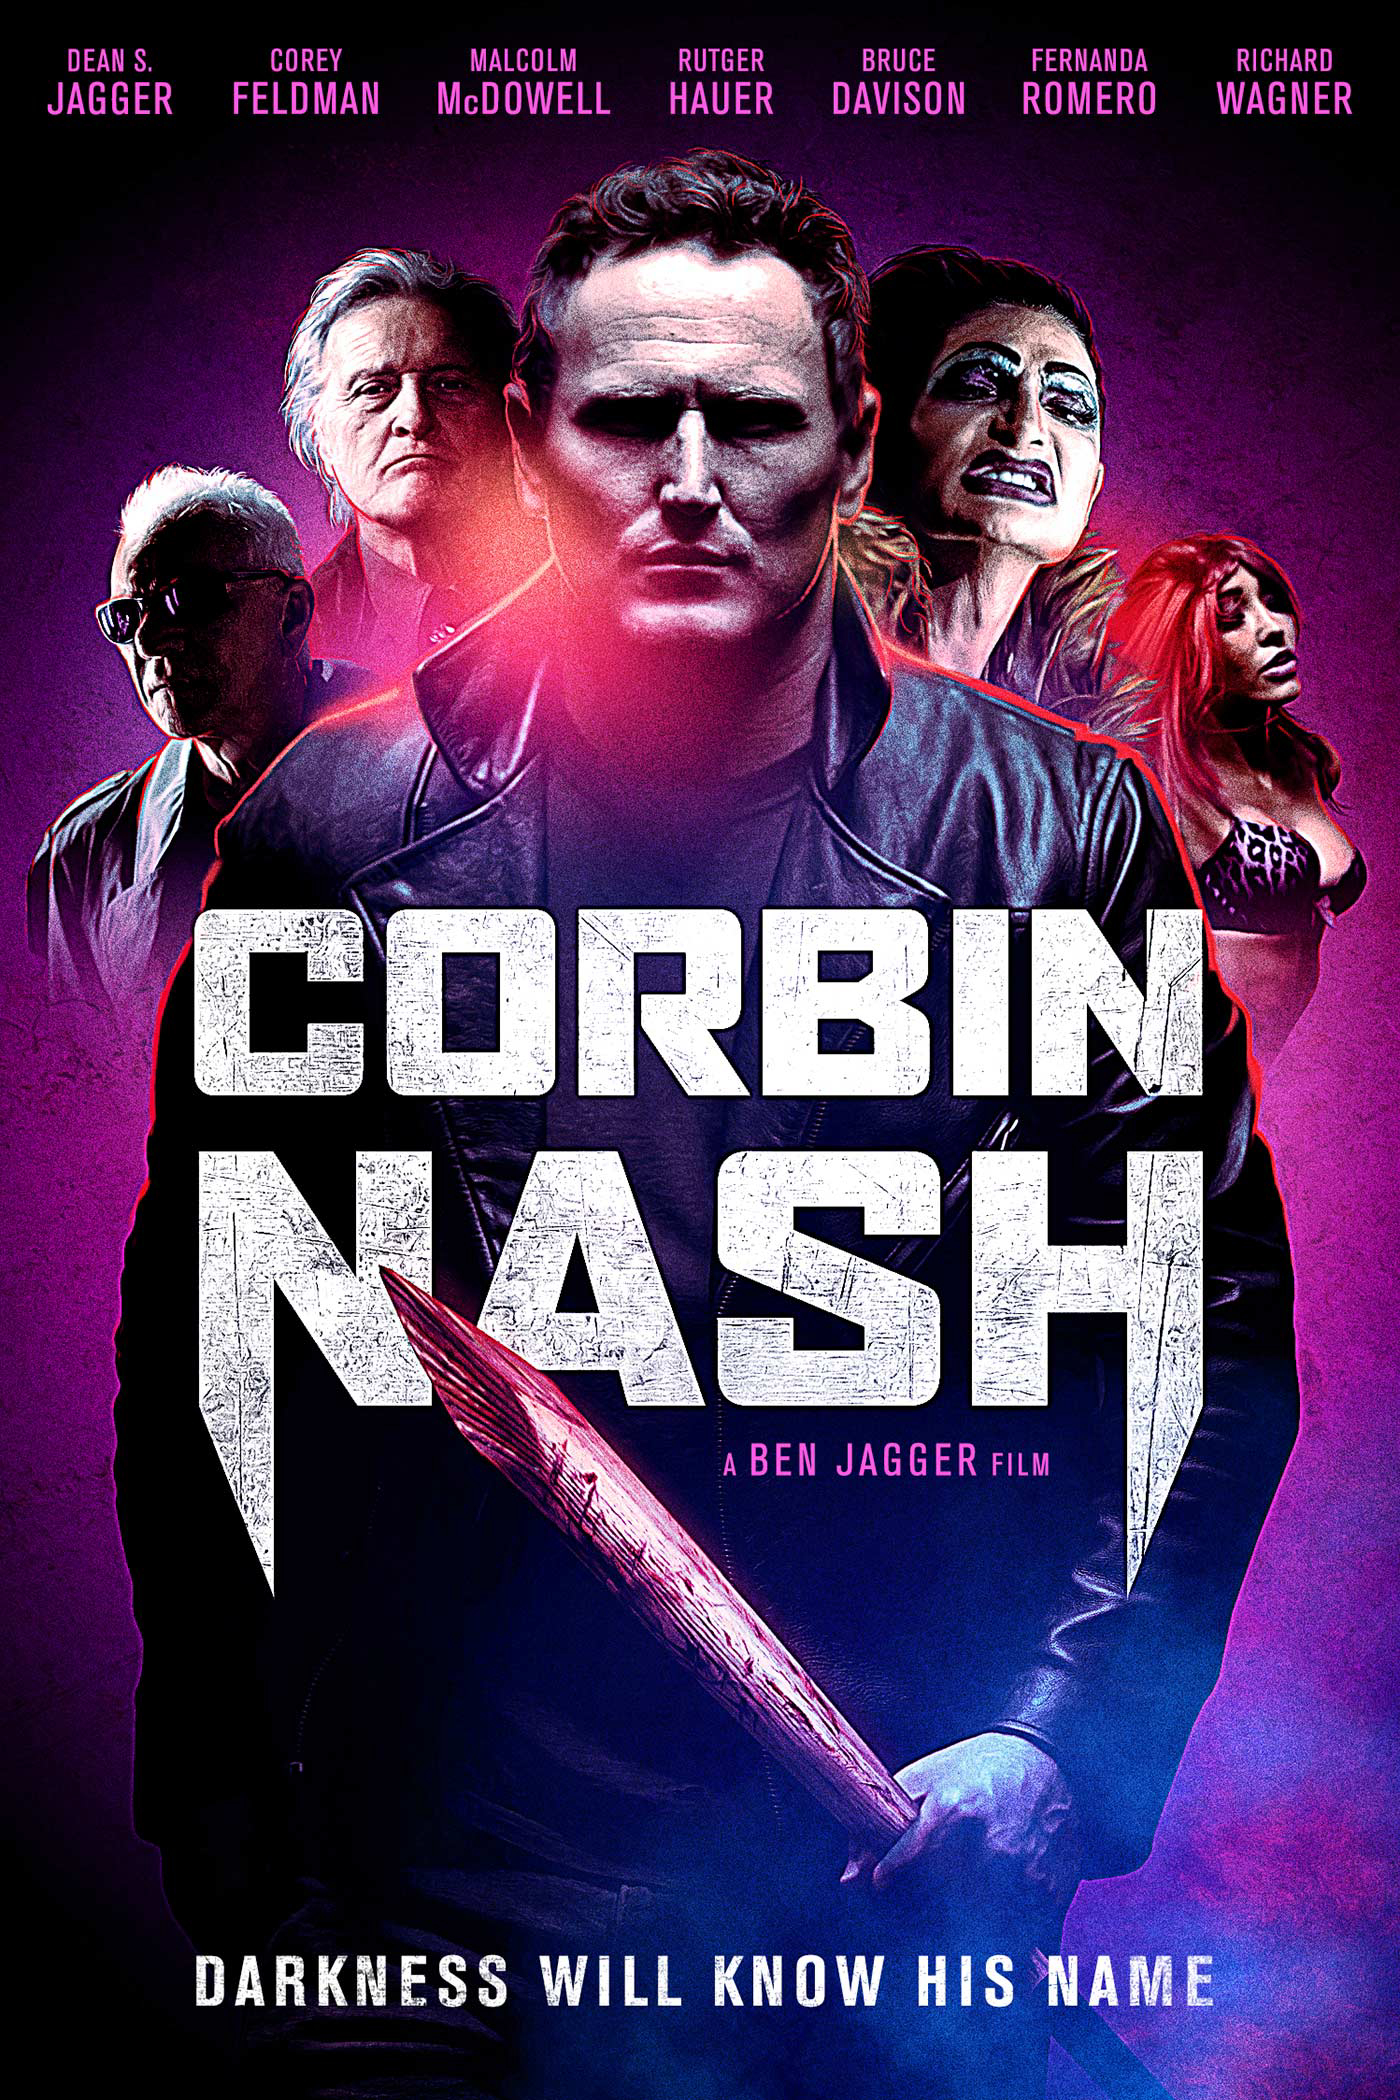 Xem Phim Kẻ Diệt Quỷ (Corbin Nash)